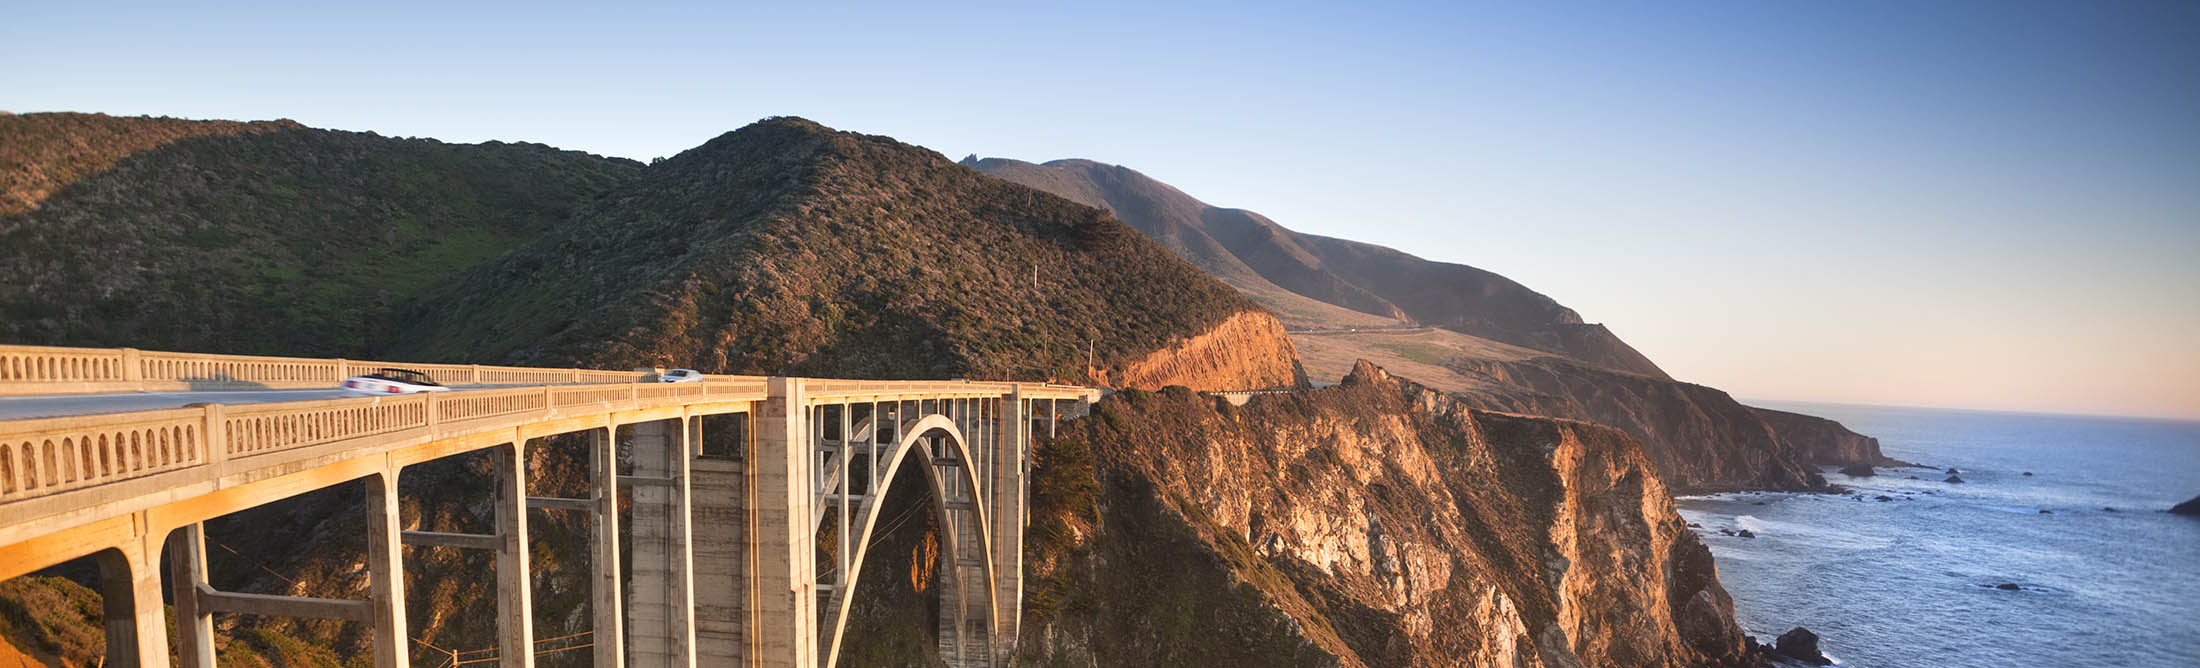 Bixby Bridge on highway 1 near the rocky Big Sur coastline of the Pacific Ocean California, USA.